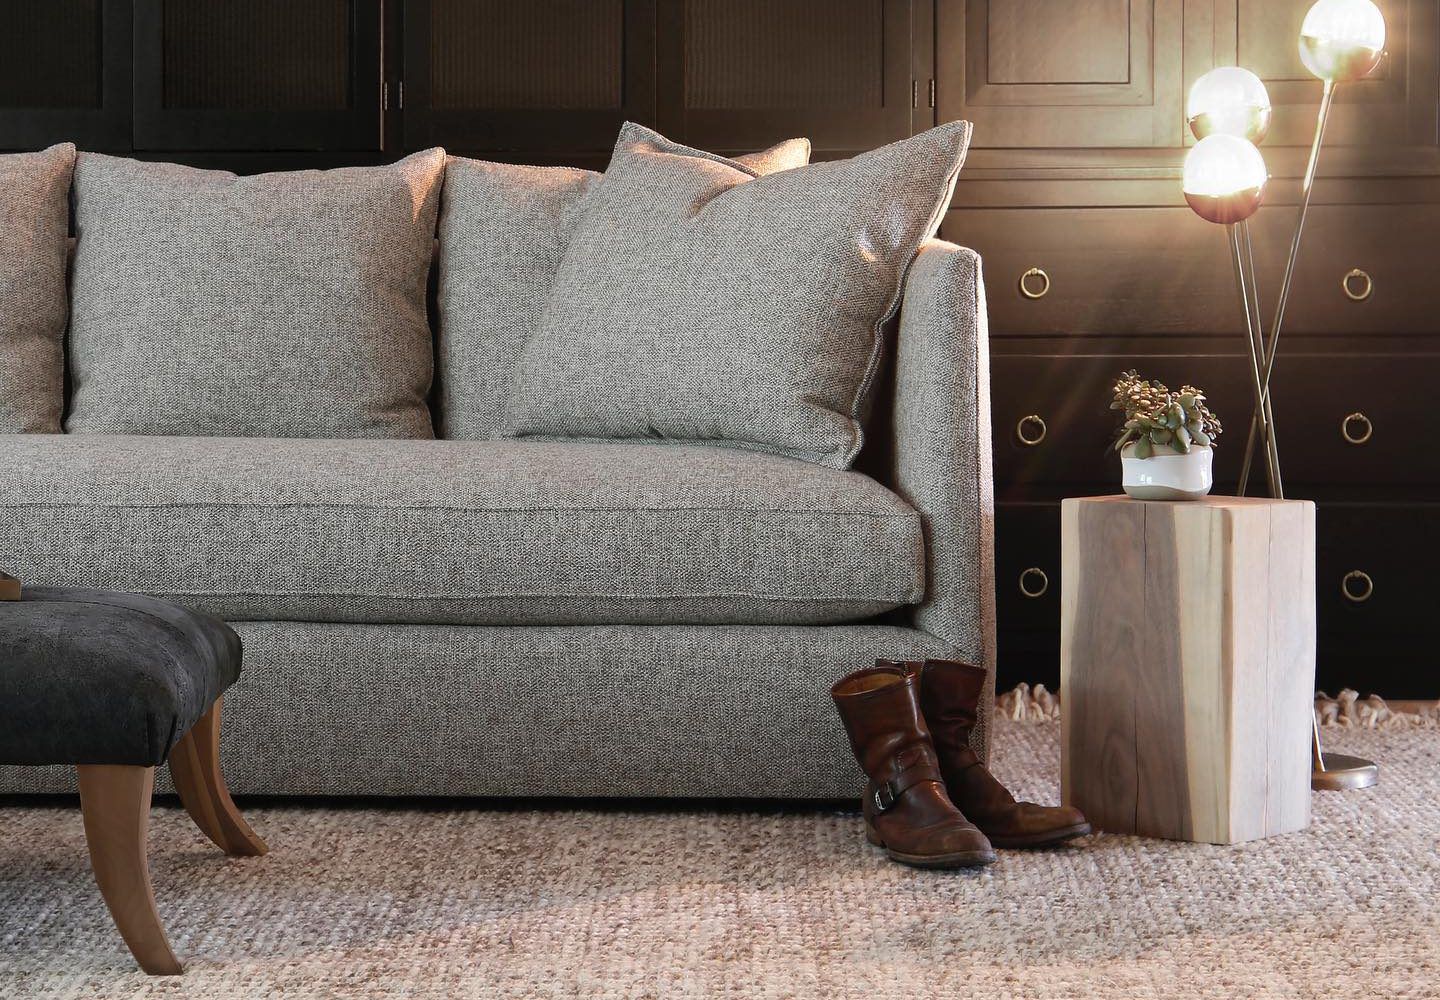 RM Living Cincinnati Modern Interior Design Furniture By Verellen